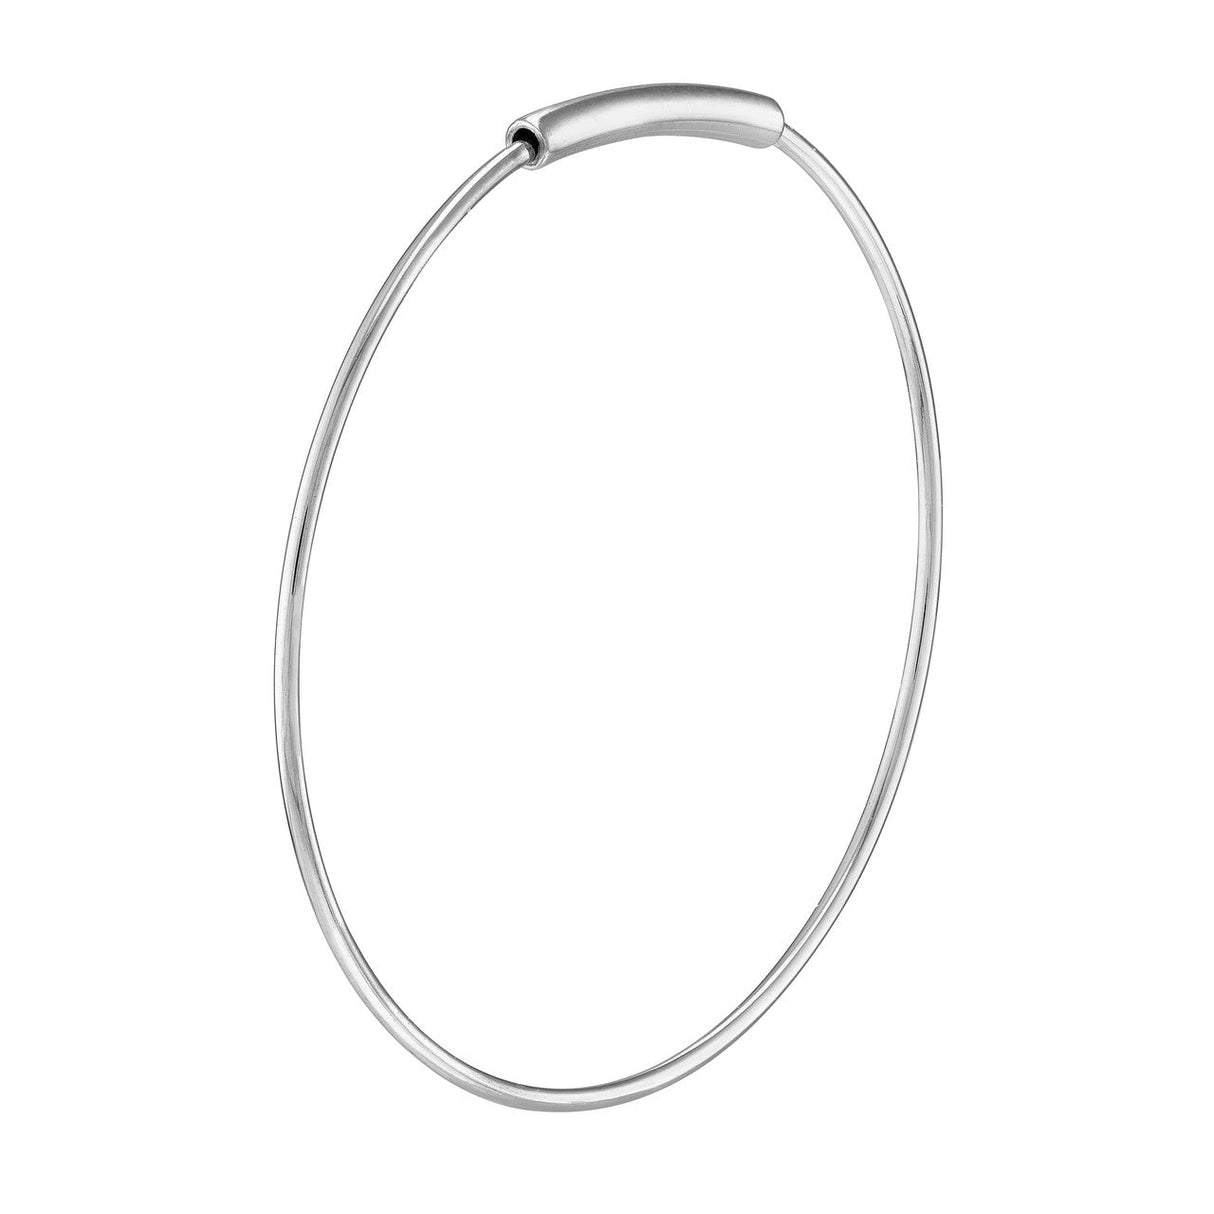 14K Solid Gold 25mm Endless Wire Hoop Earrings - Diamond Origin